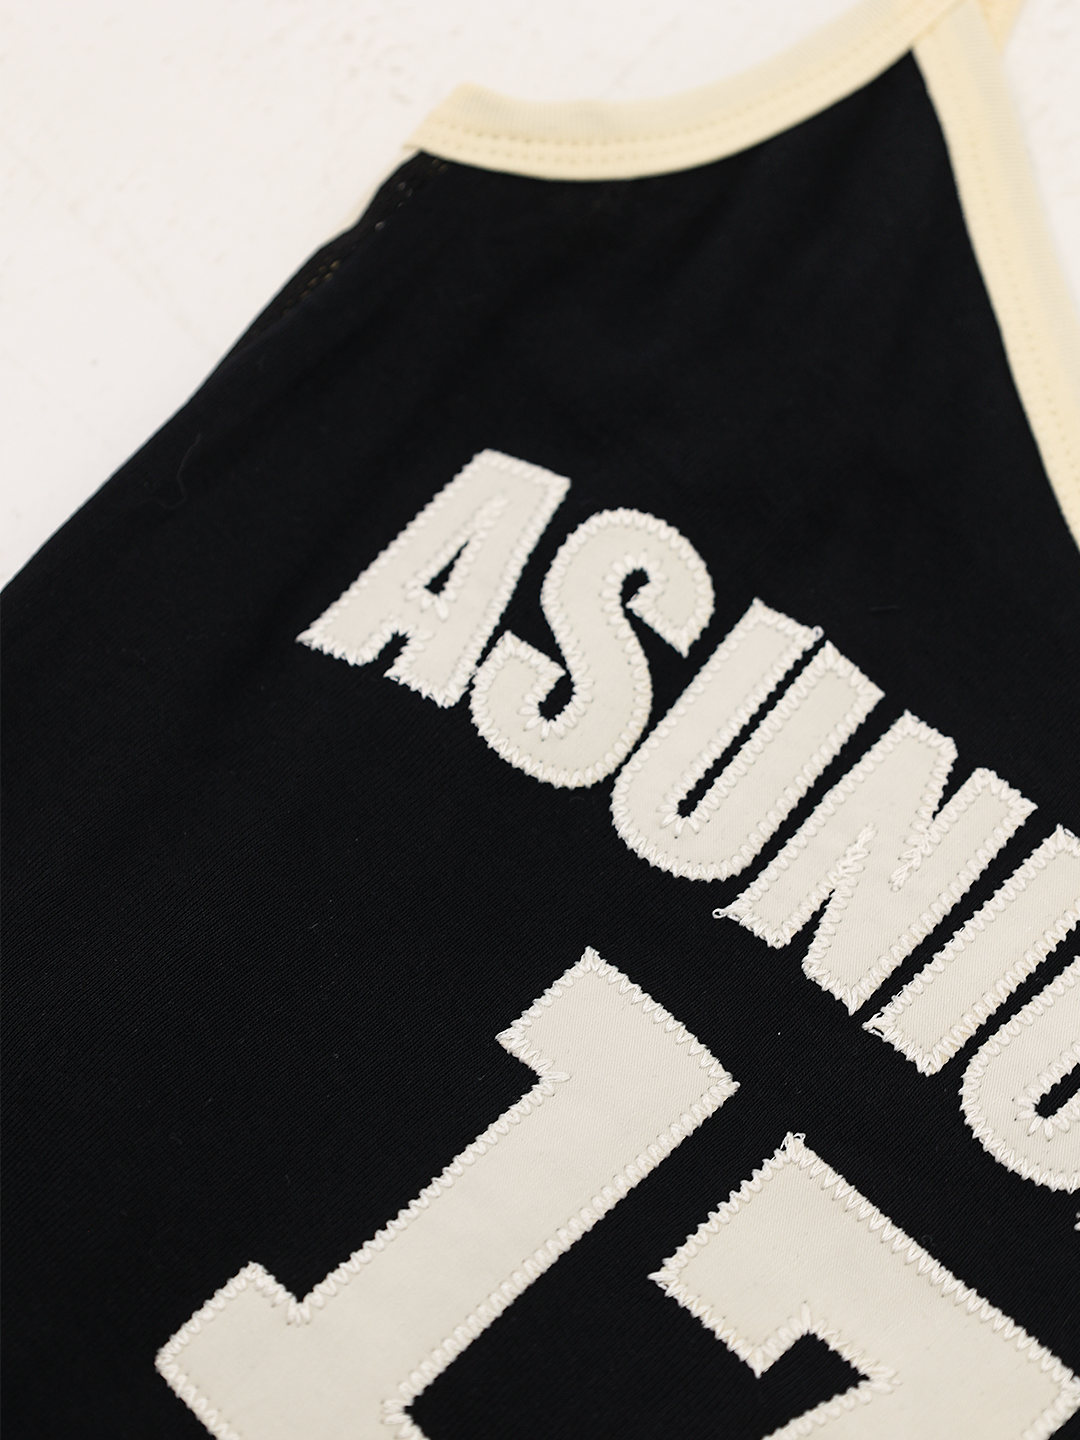 ASUNI CLUB 17 Cropped Jersey Tank Top (Black)